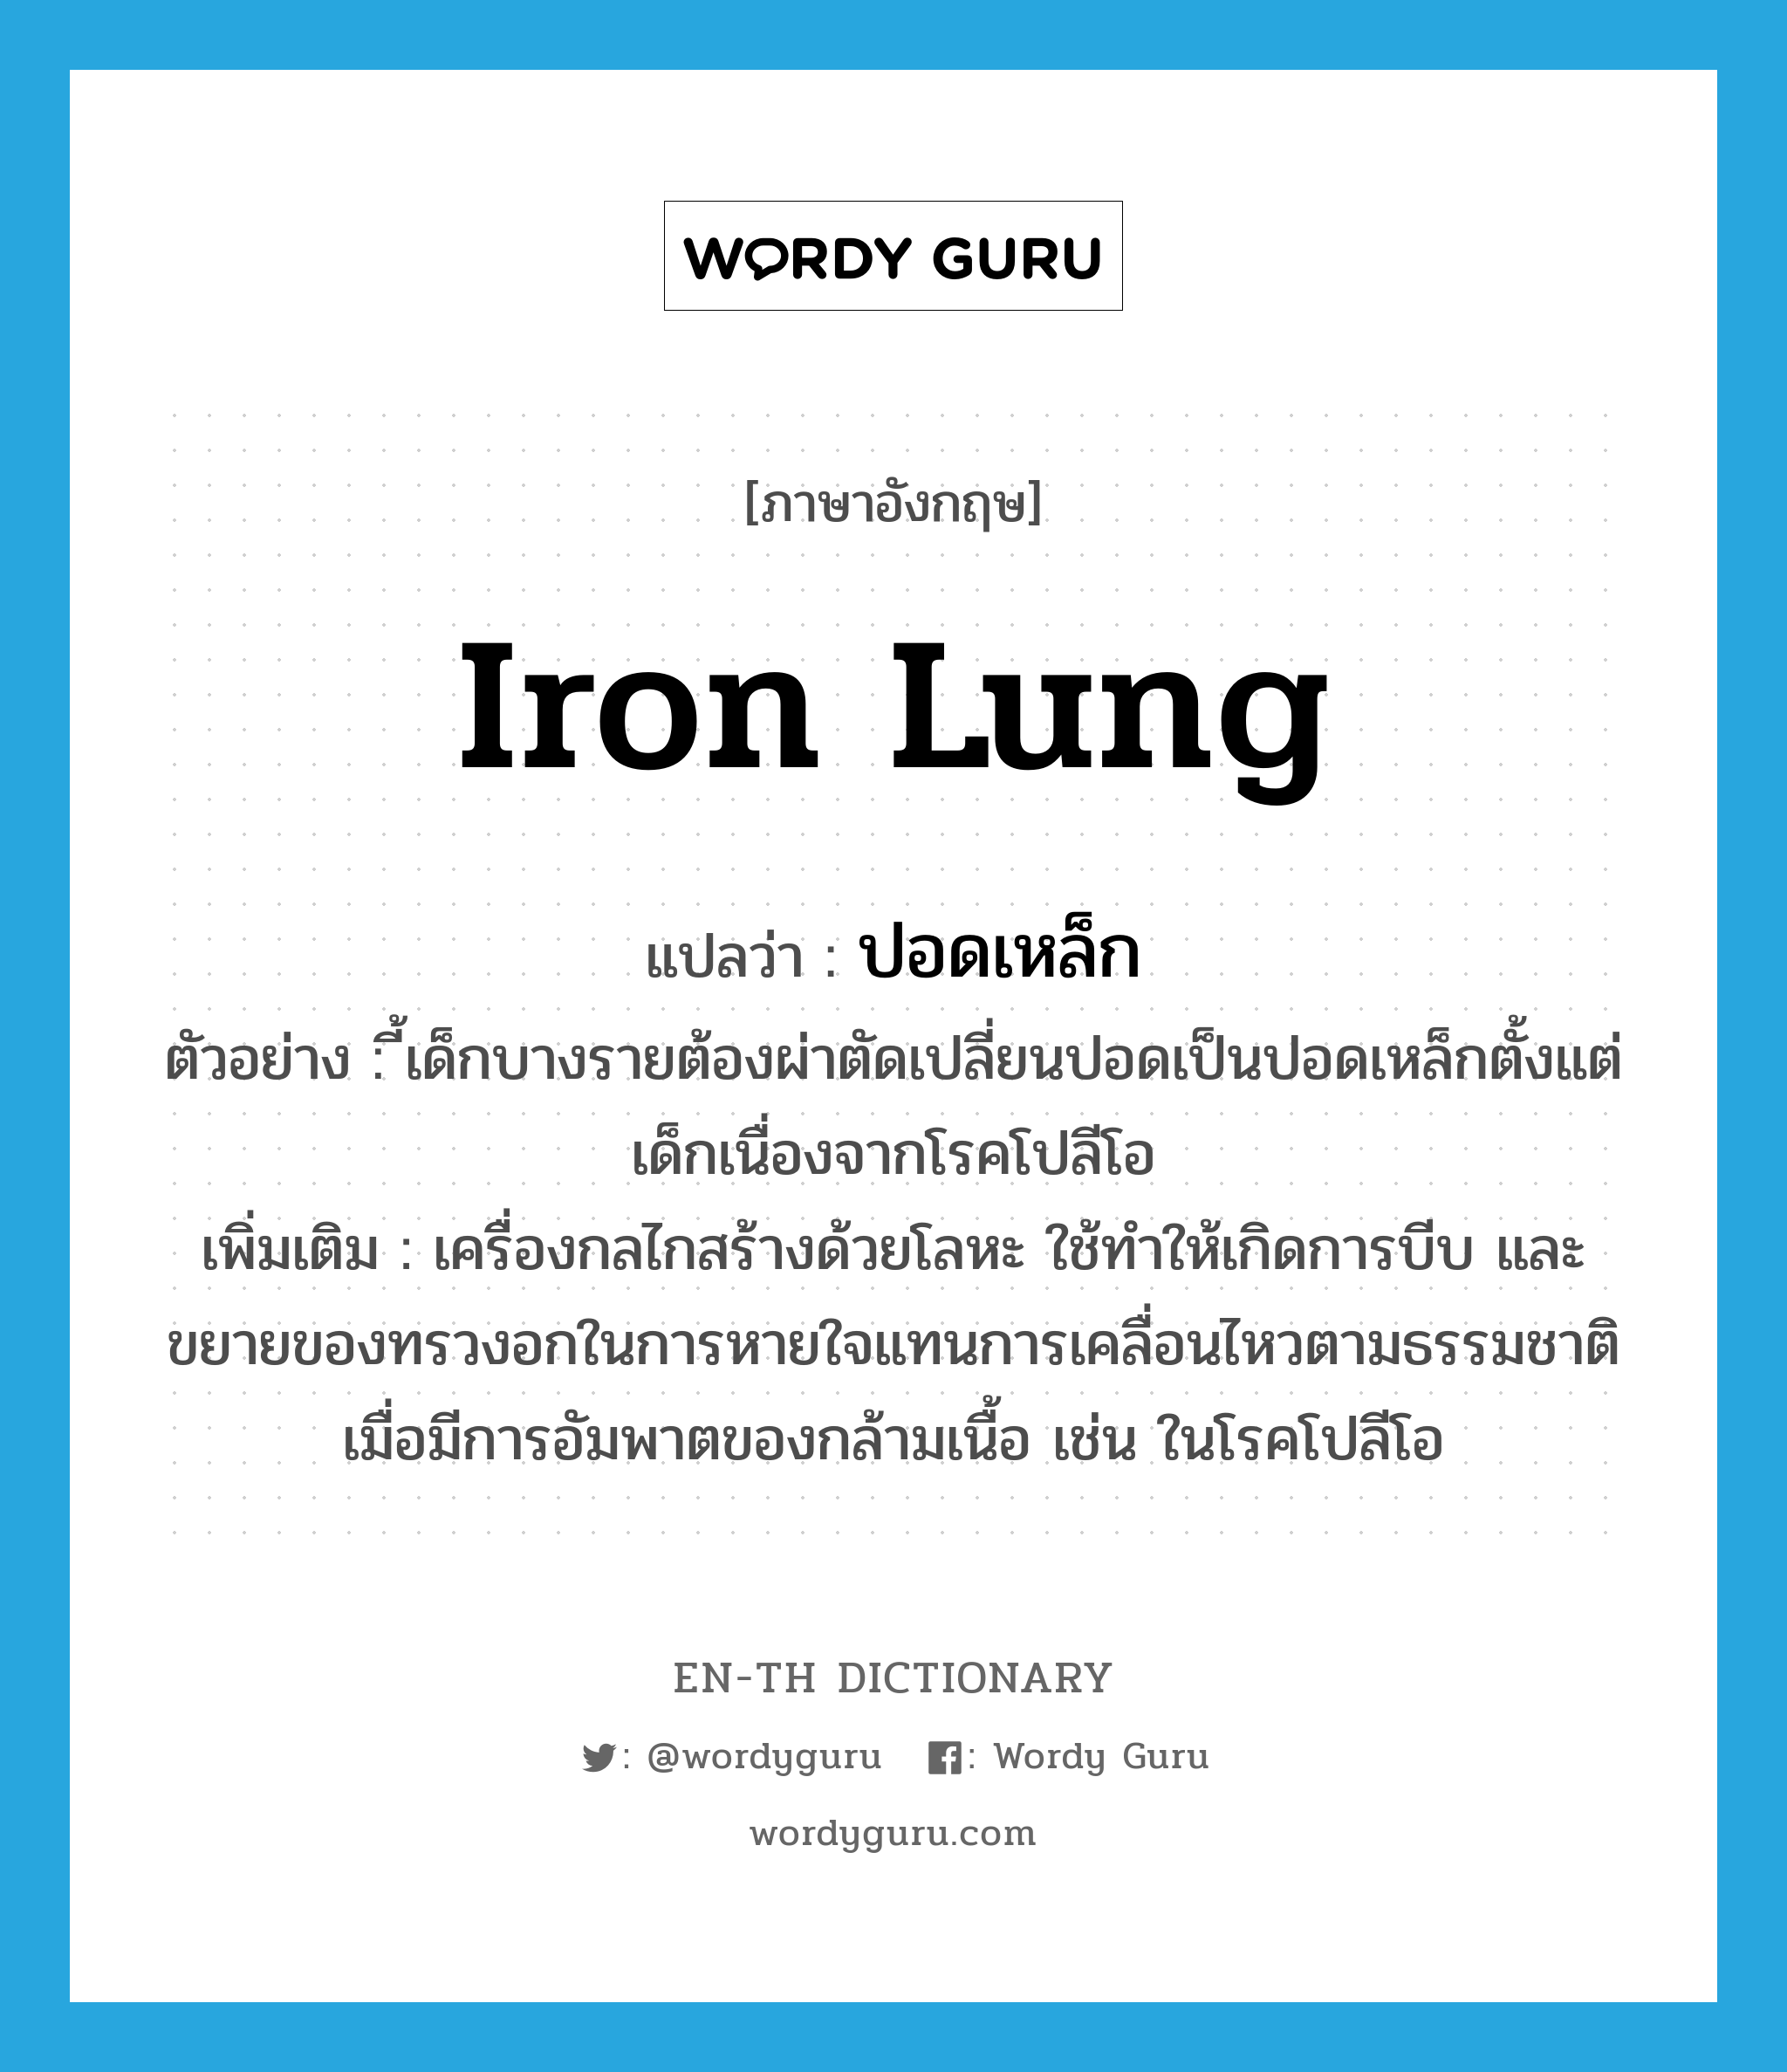 iron lung แปลว่า?, คำศัพท์ภาษาอังกฤษ iron lung แปลว่า ปอดเหล็ก ประเภท N ตัวอย่าง ี้เด็กบางรายต้องผ่าตัดเปลี่ยนปอดเป็นปอดเหล็กตั้งแต่เด็กเนื่องจากโรคโปลีโอ เพิ่มเติม เครื่องกลไกสร้างด้วยโลหะ ใช้ทำให้เกิดการบีบ และขยายของทรวงอกในการหายใจแทนการเคลื่อนไหวตามธรรมชาติ เมื่อมีการอัมพาตของกล้ามเนื้อ เช่น ในโรคโปลีโอ หมวด N